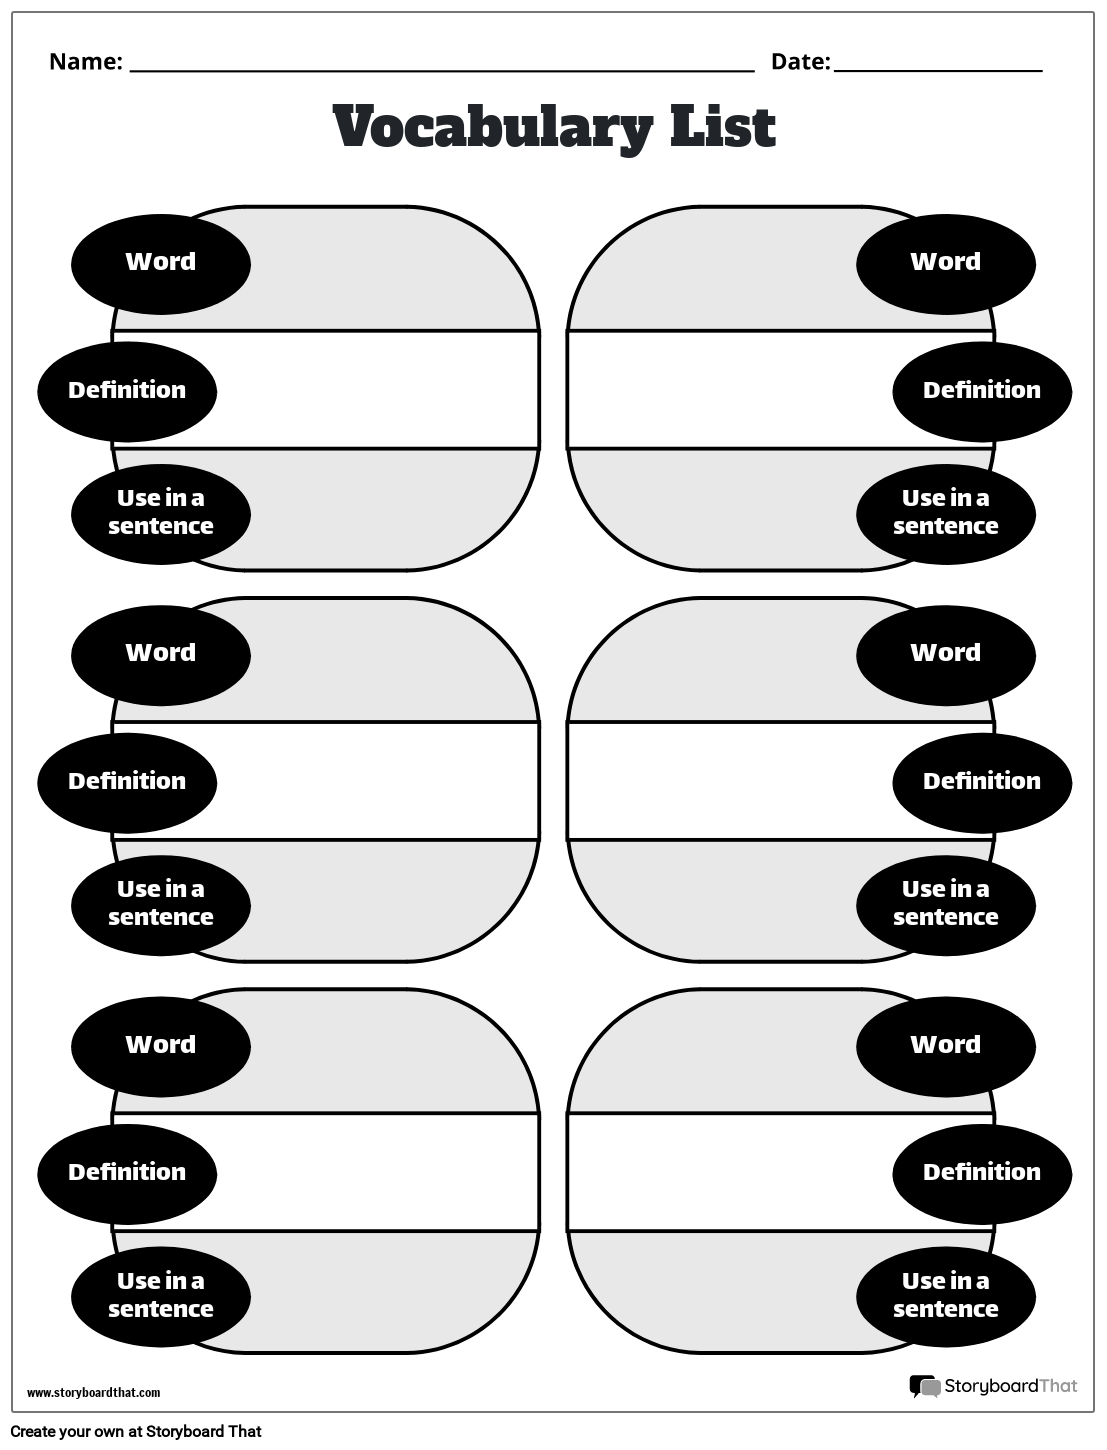 vocabulary-worksheet-templates-storyboardthat